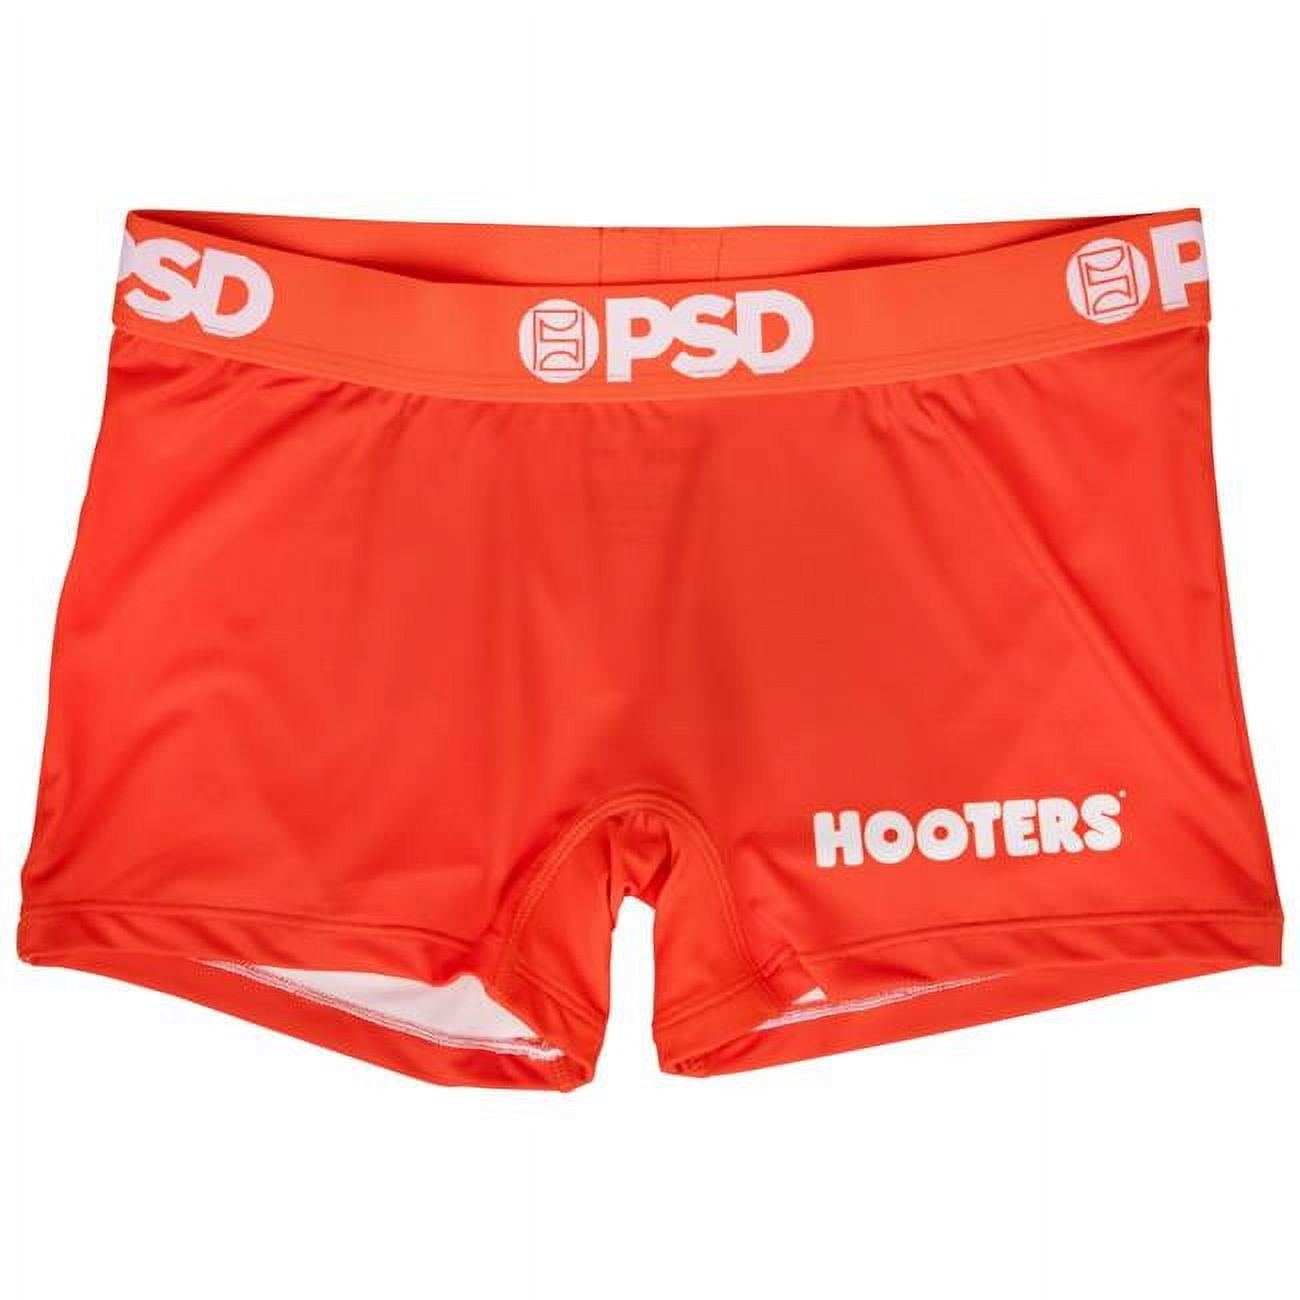 Hooters Hooters Restaurant Uniform Microfiber Blend Boy Shorts